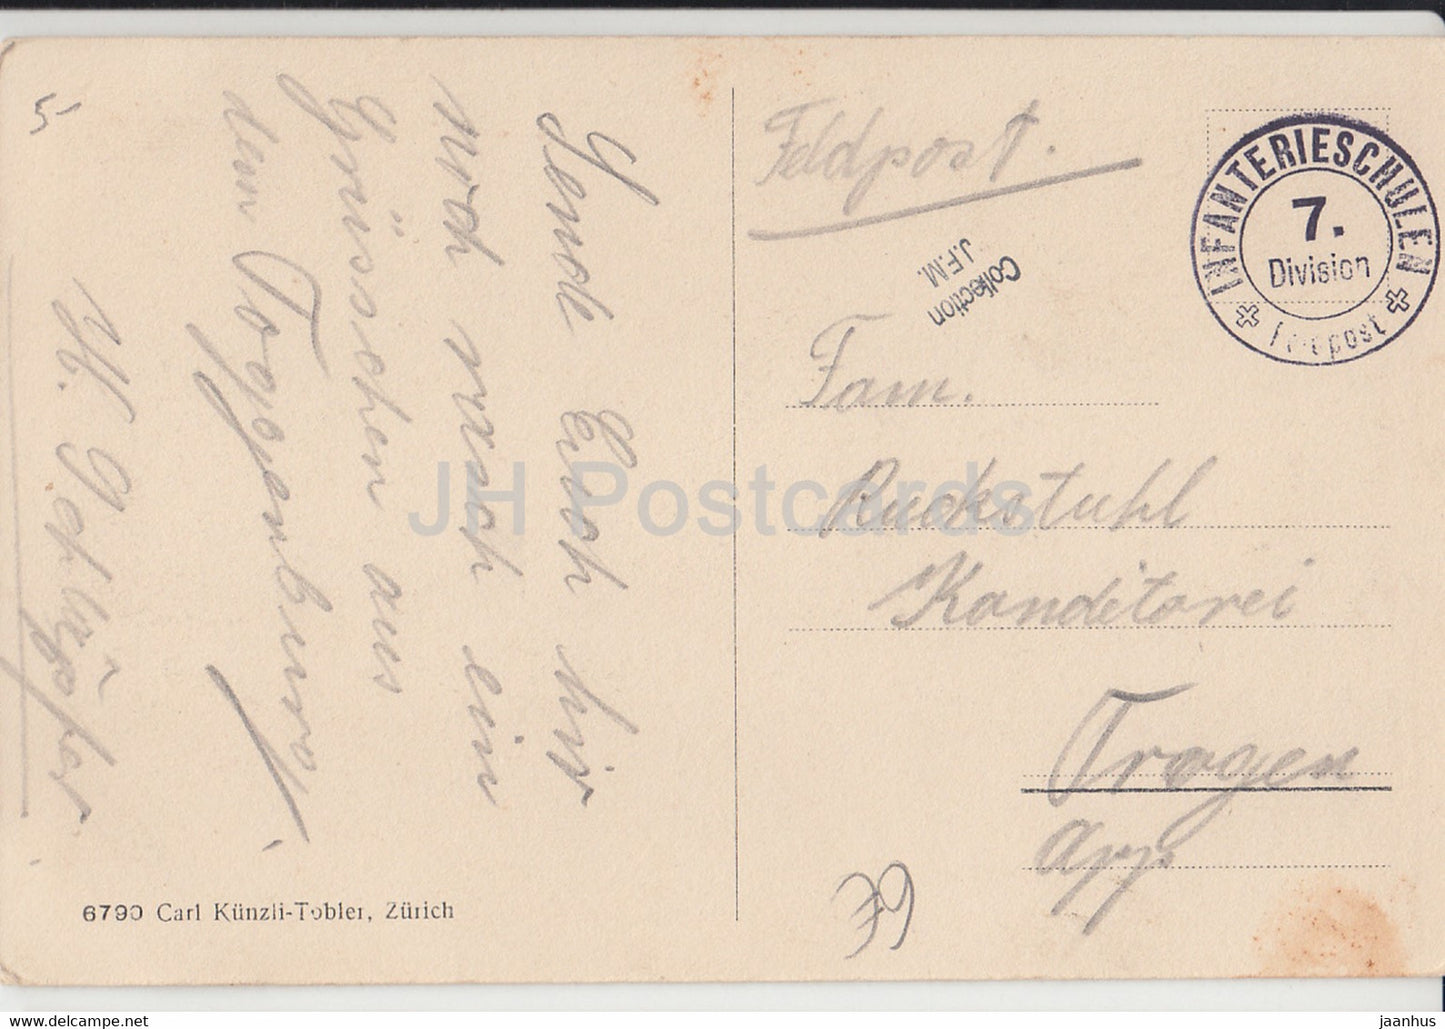 Alt St. Johann - Toggenburg - 6790 - Feldpost - Infanterie Schulen alte Postkarte - Schweiz - gebraucht